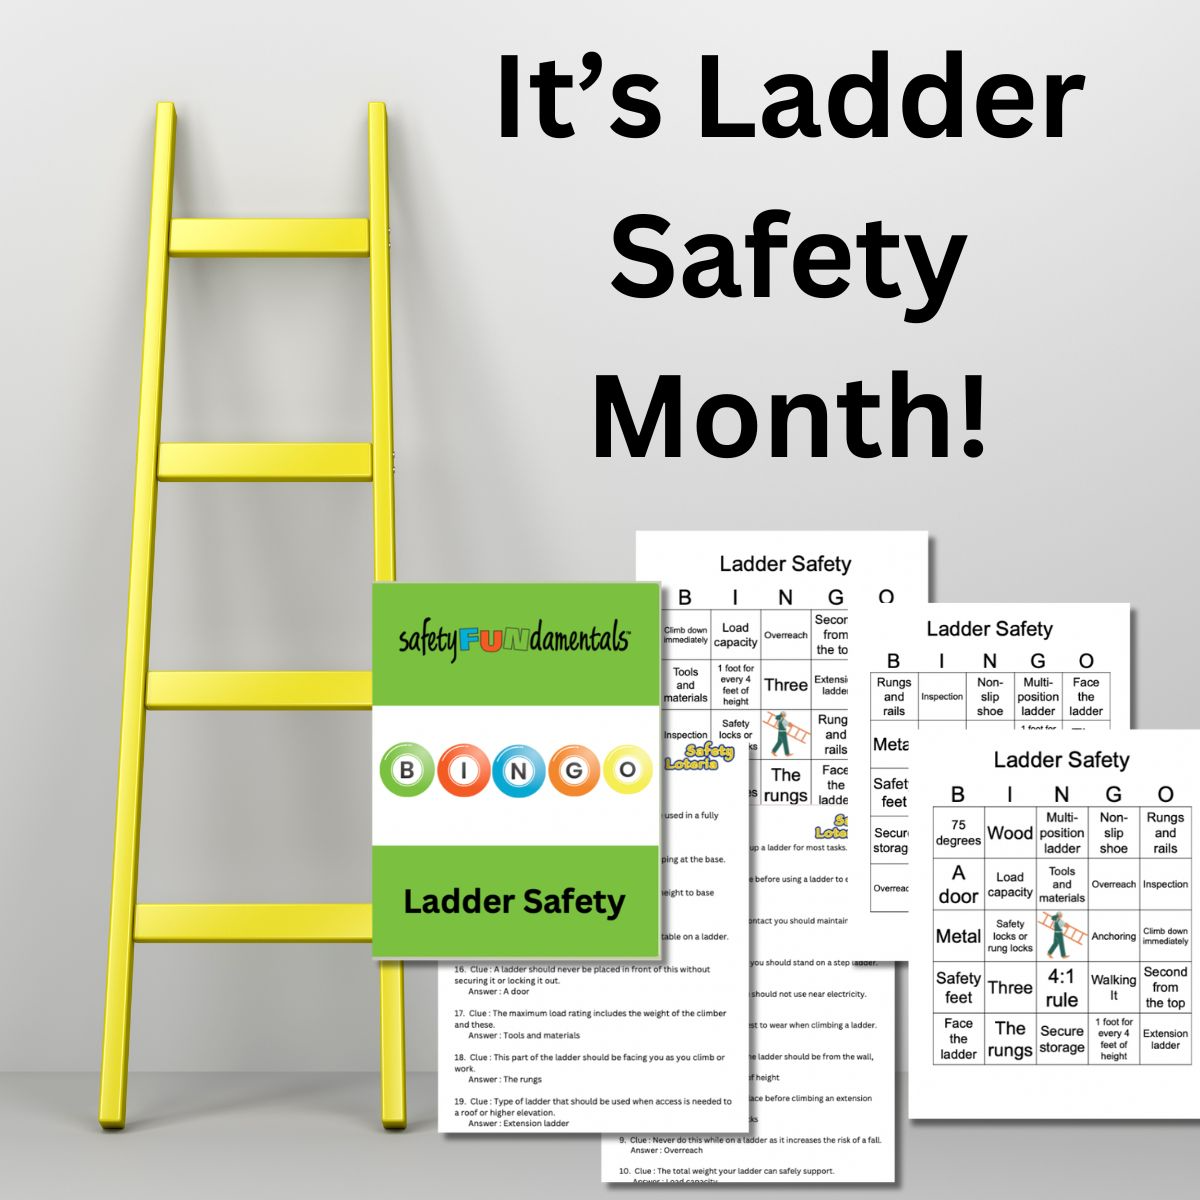 It's Ladder Safety Month!